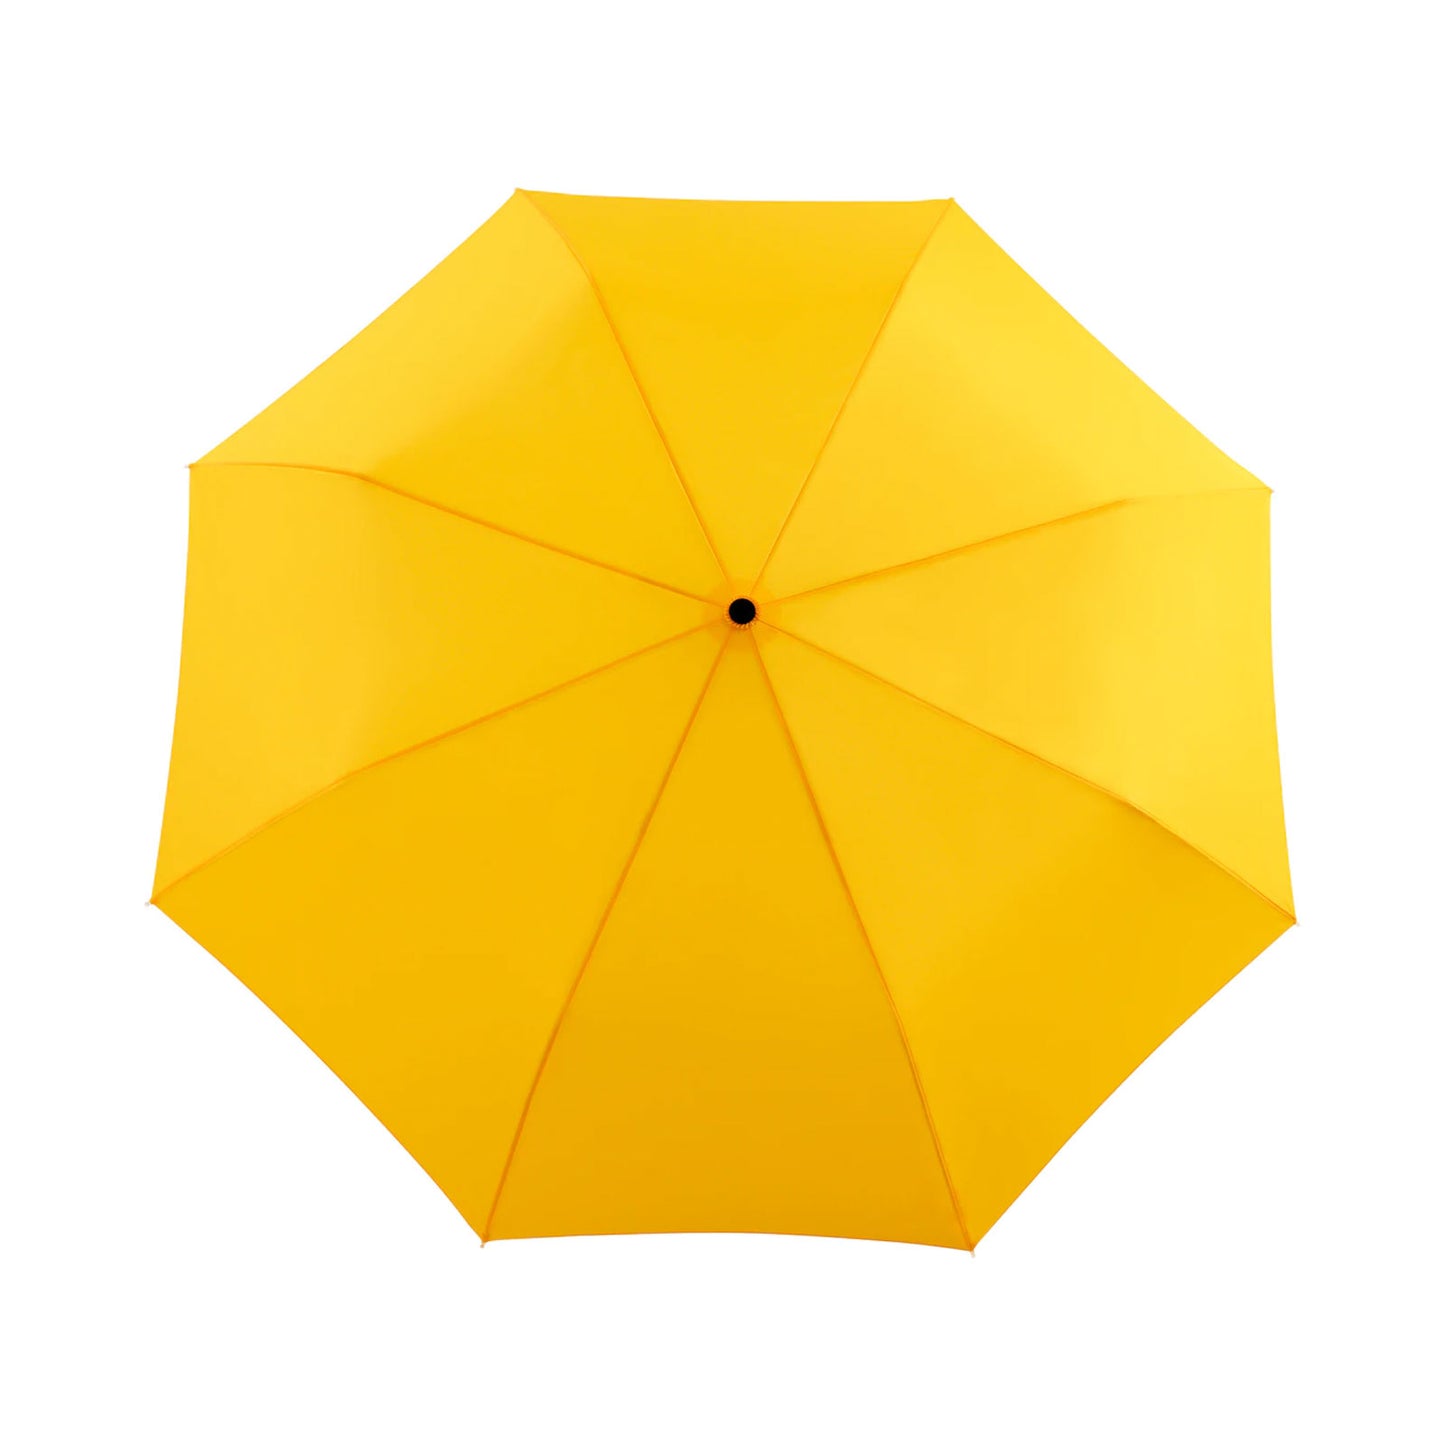 Original Duckhead Compact Umbrella, Yellow